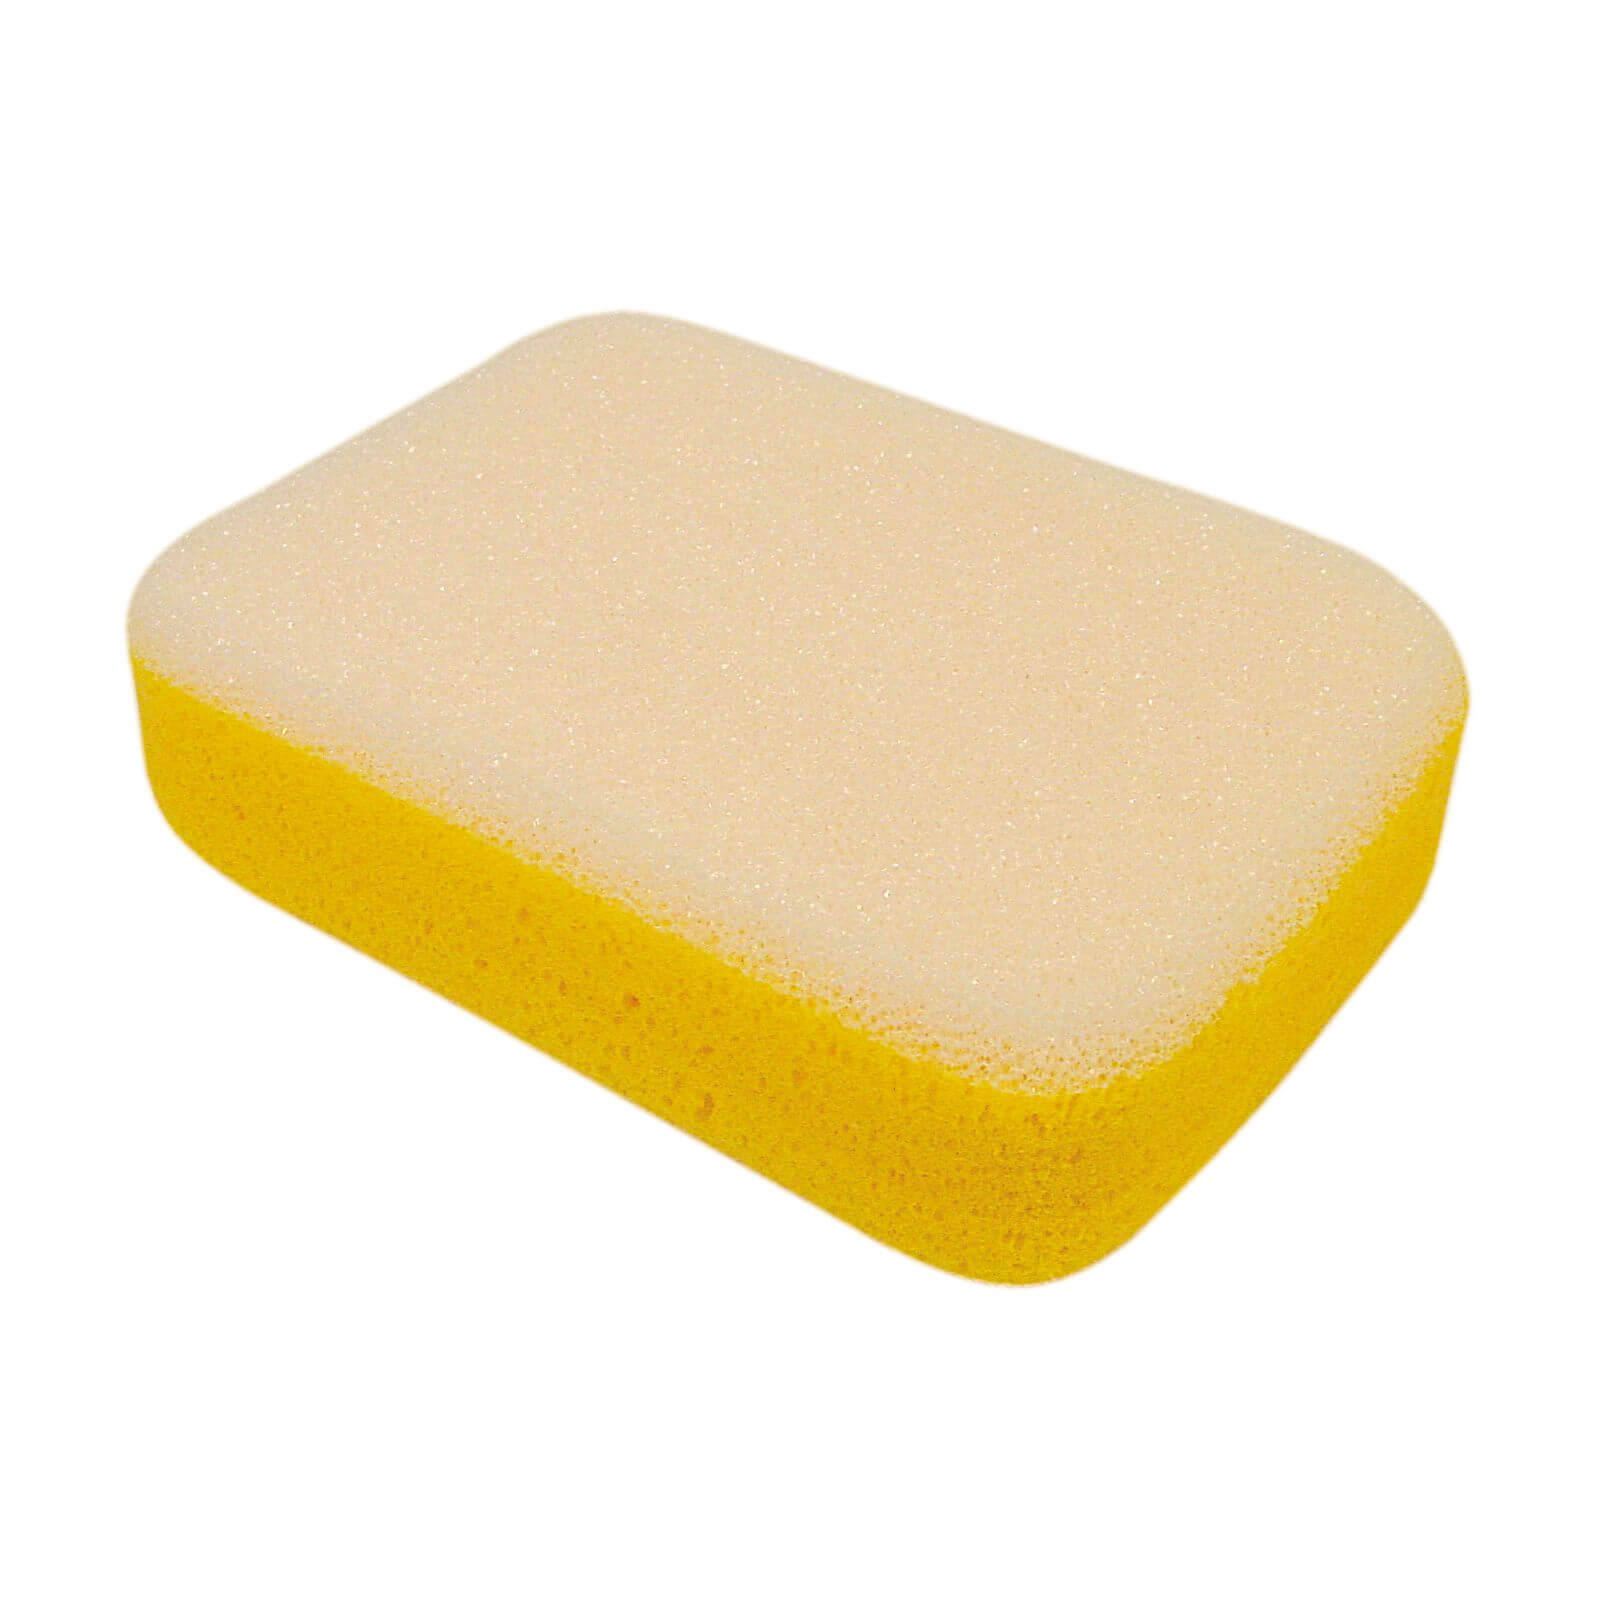 Vitrex Dual Purpose Grouting Sponge